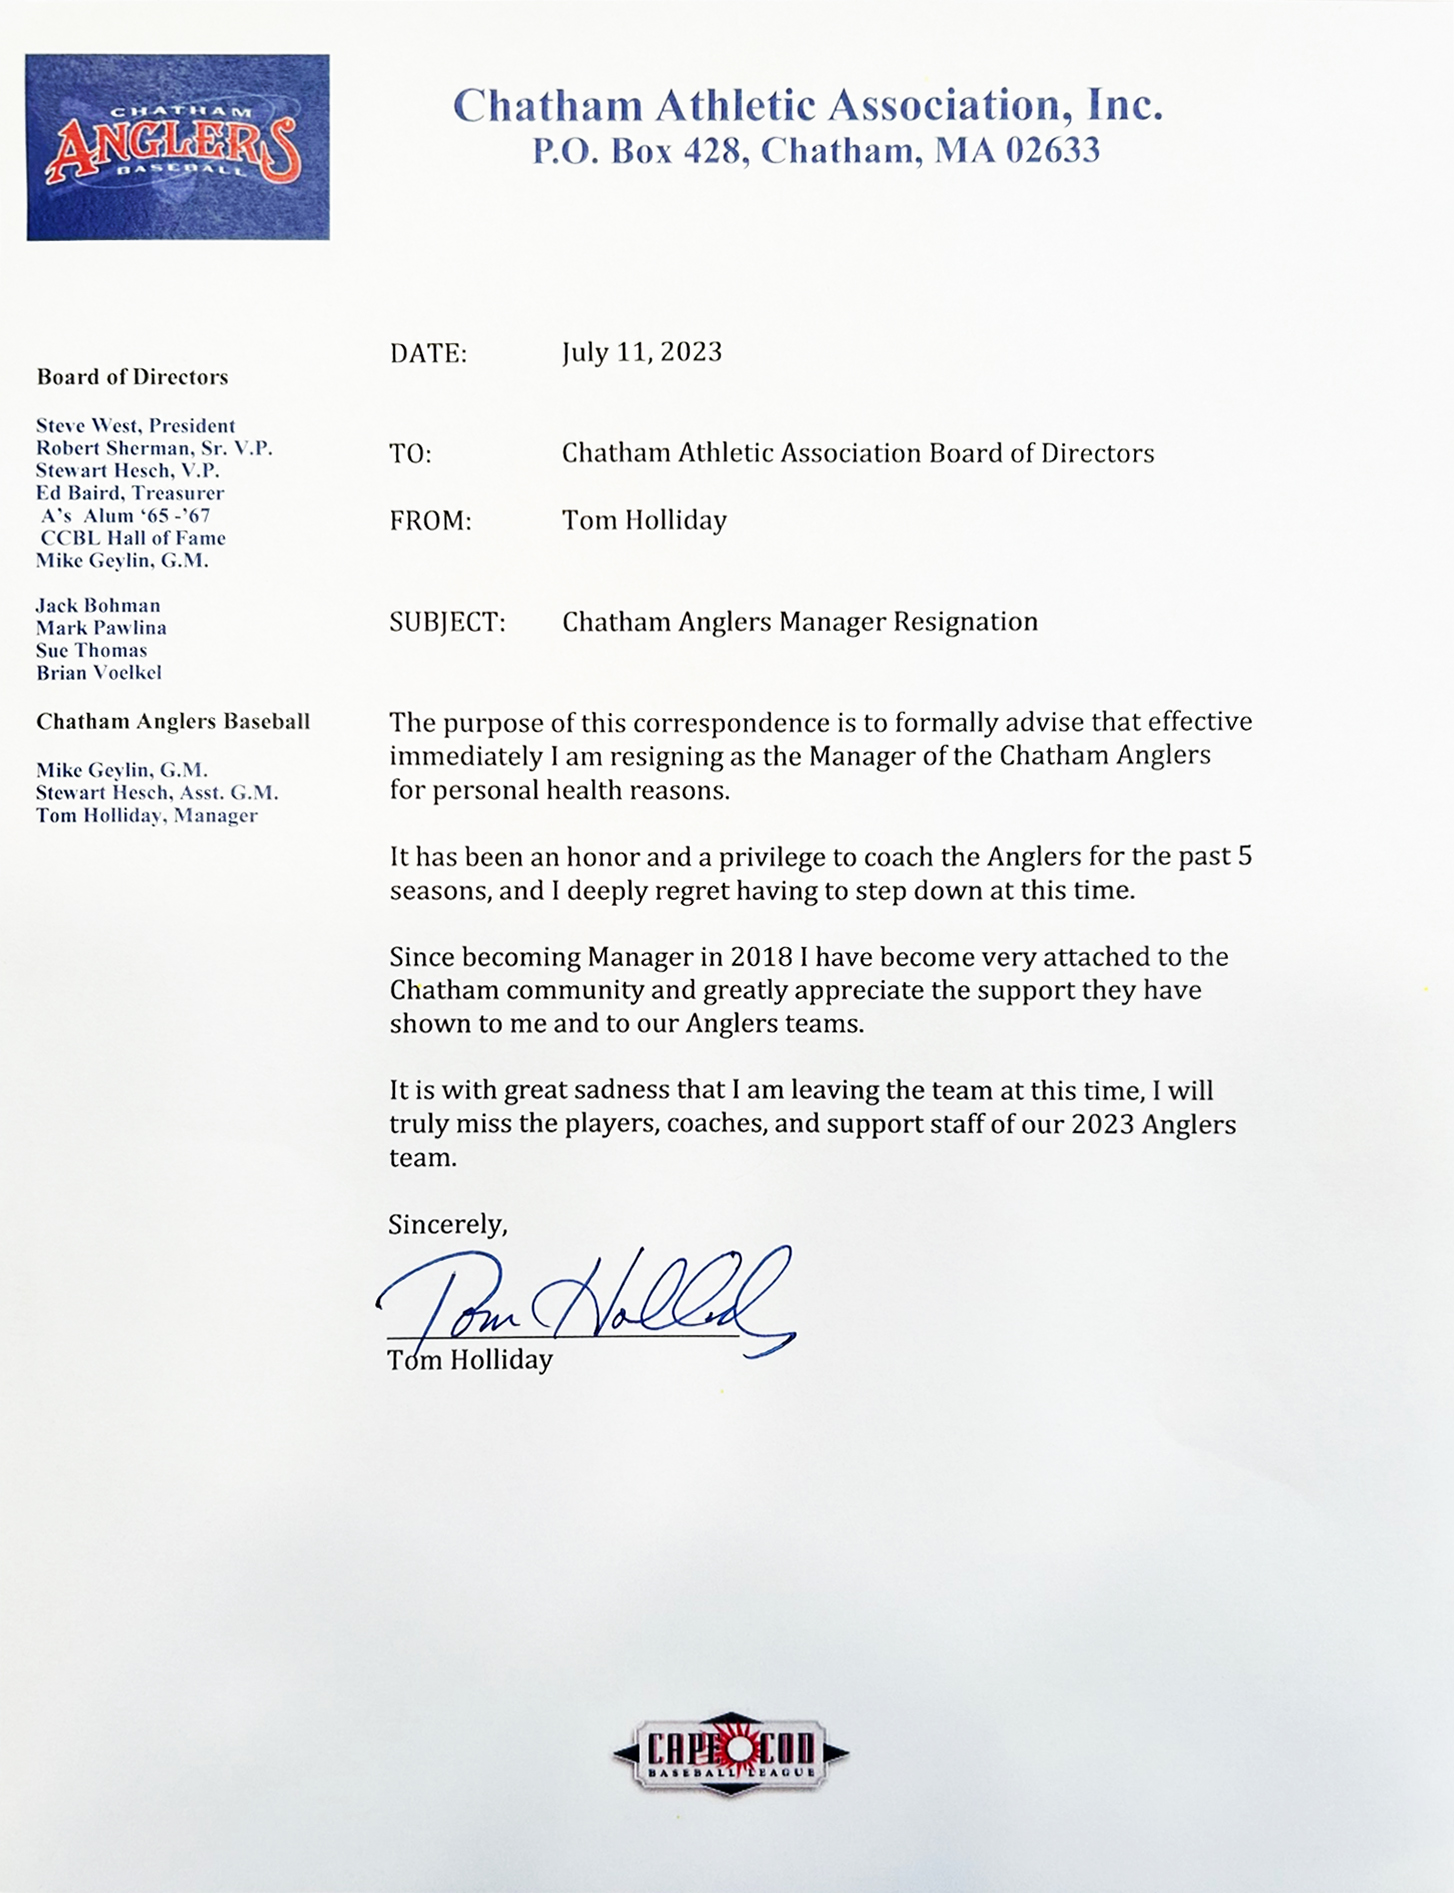 Tom Holliday resignation letter | July 11, 2023